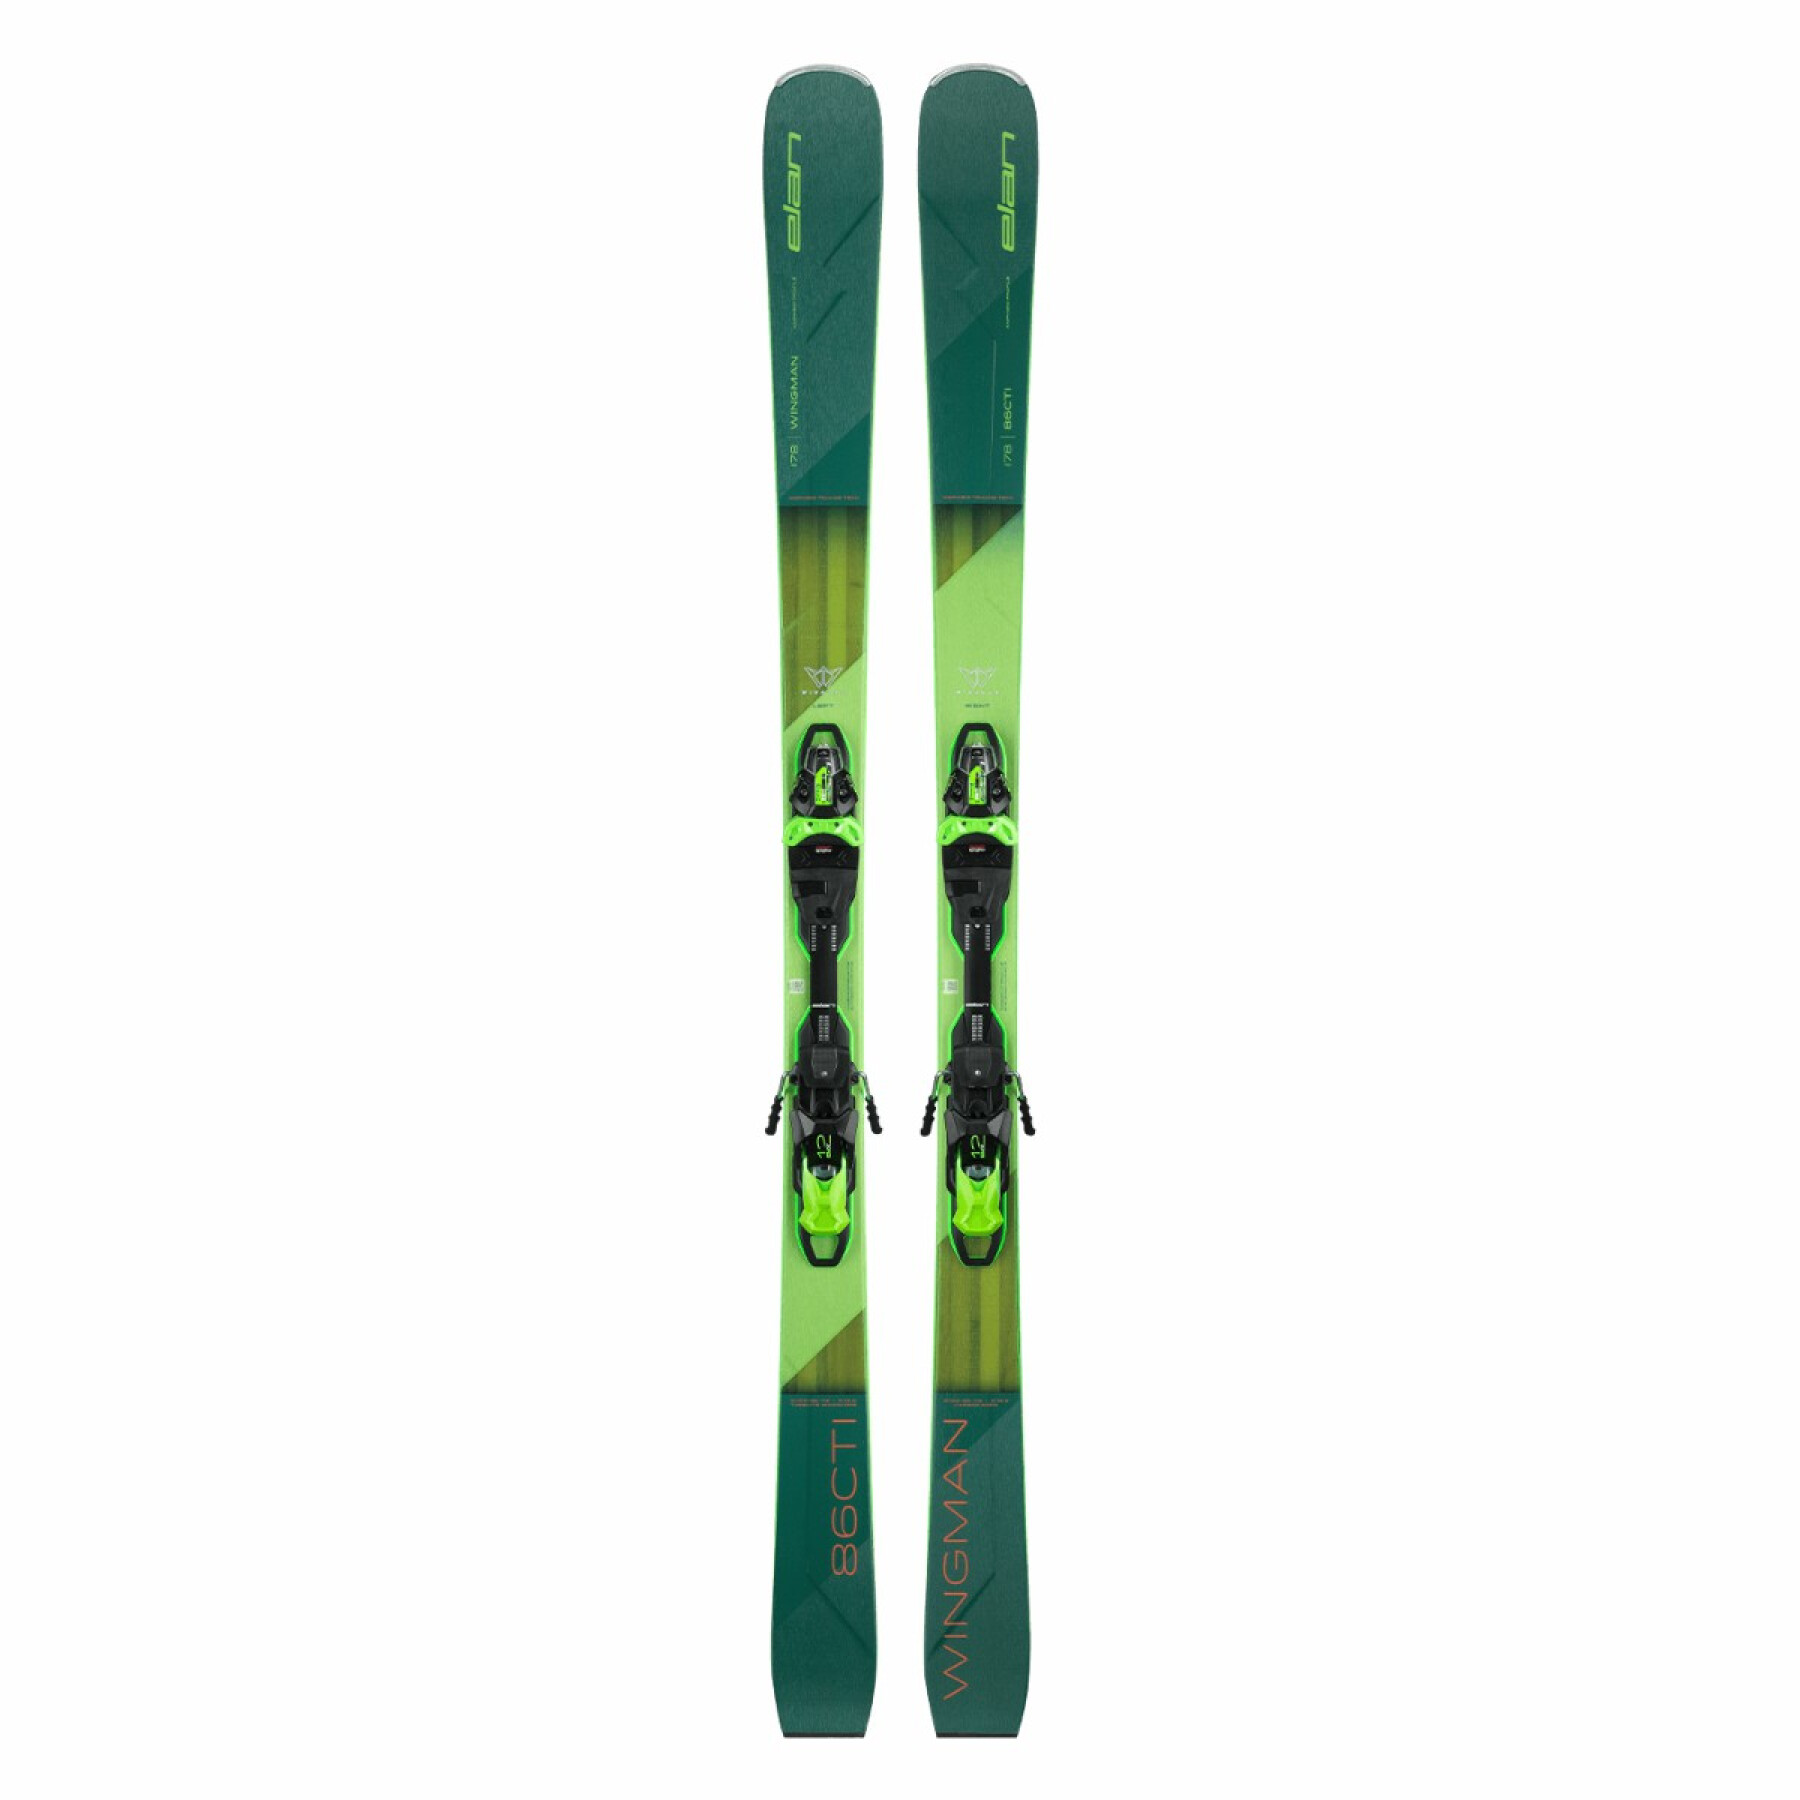 Wingman 86 cti fx emx 12.0 ski pack with bindings Elan